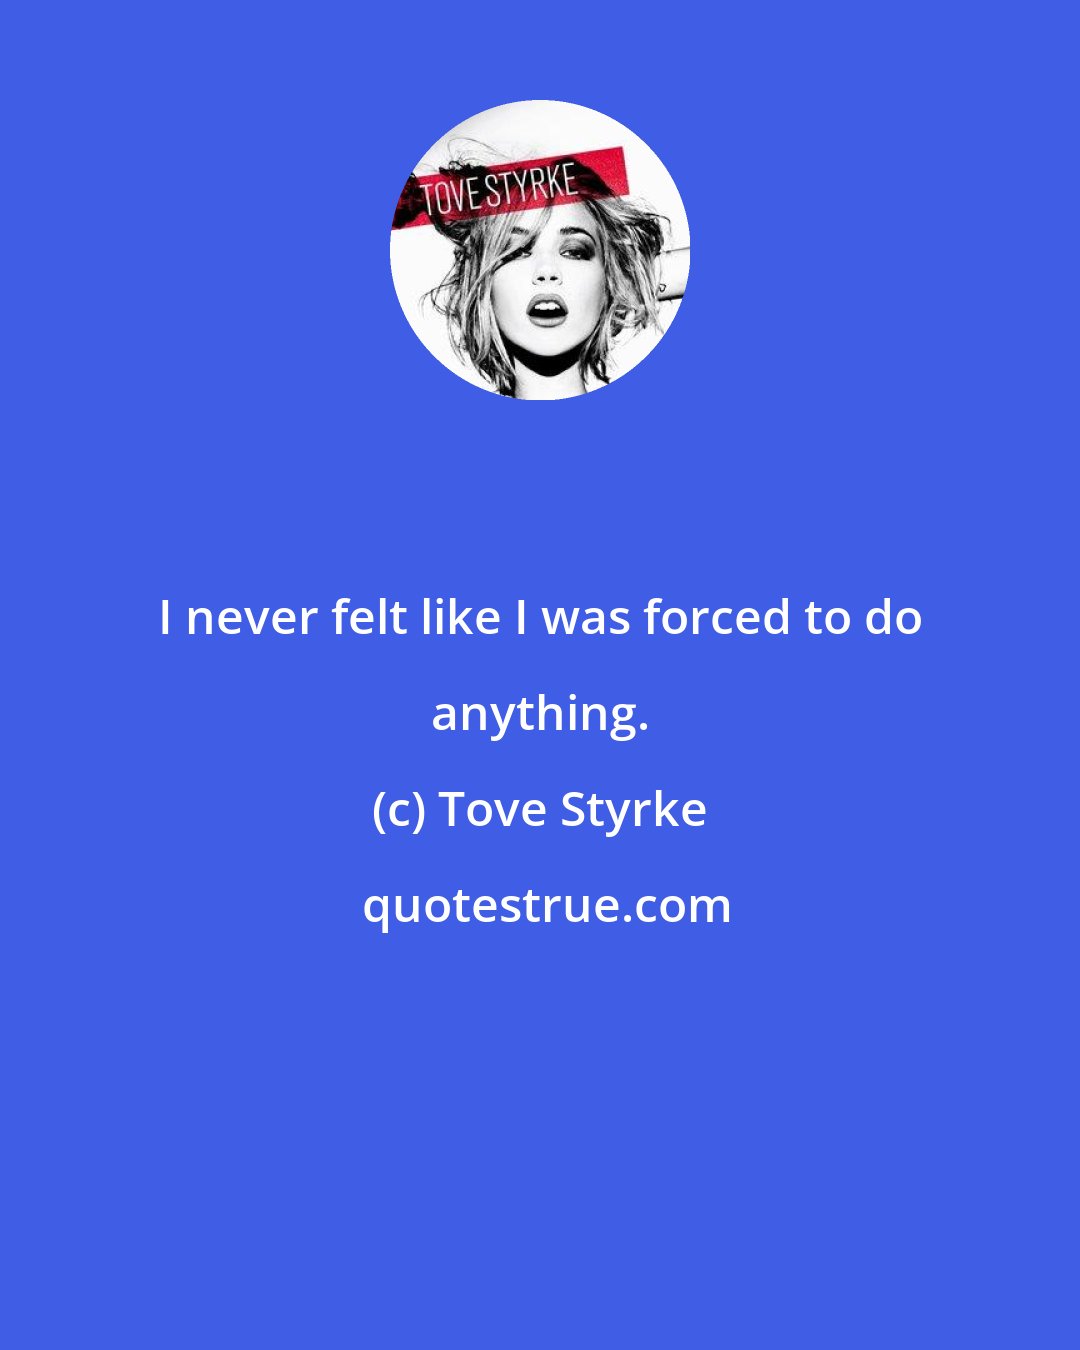 Tove Styrke: I never felt like I was forced to do anything.